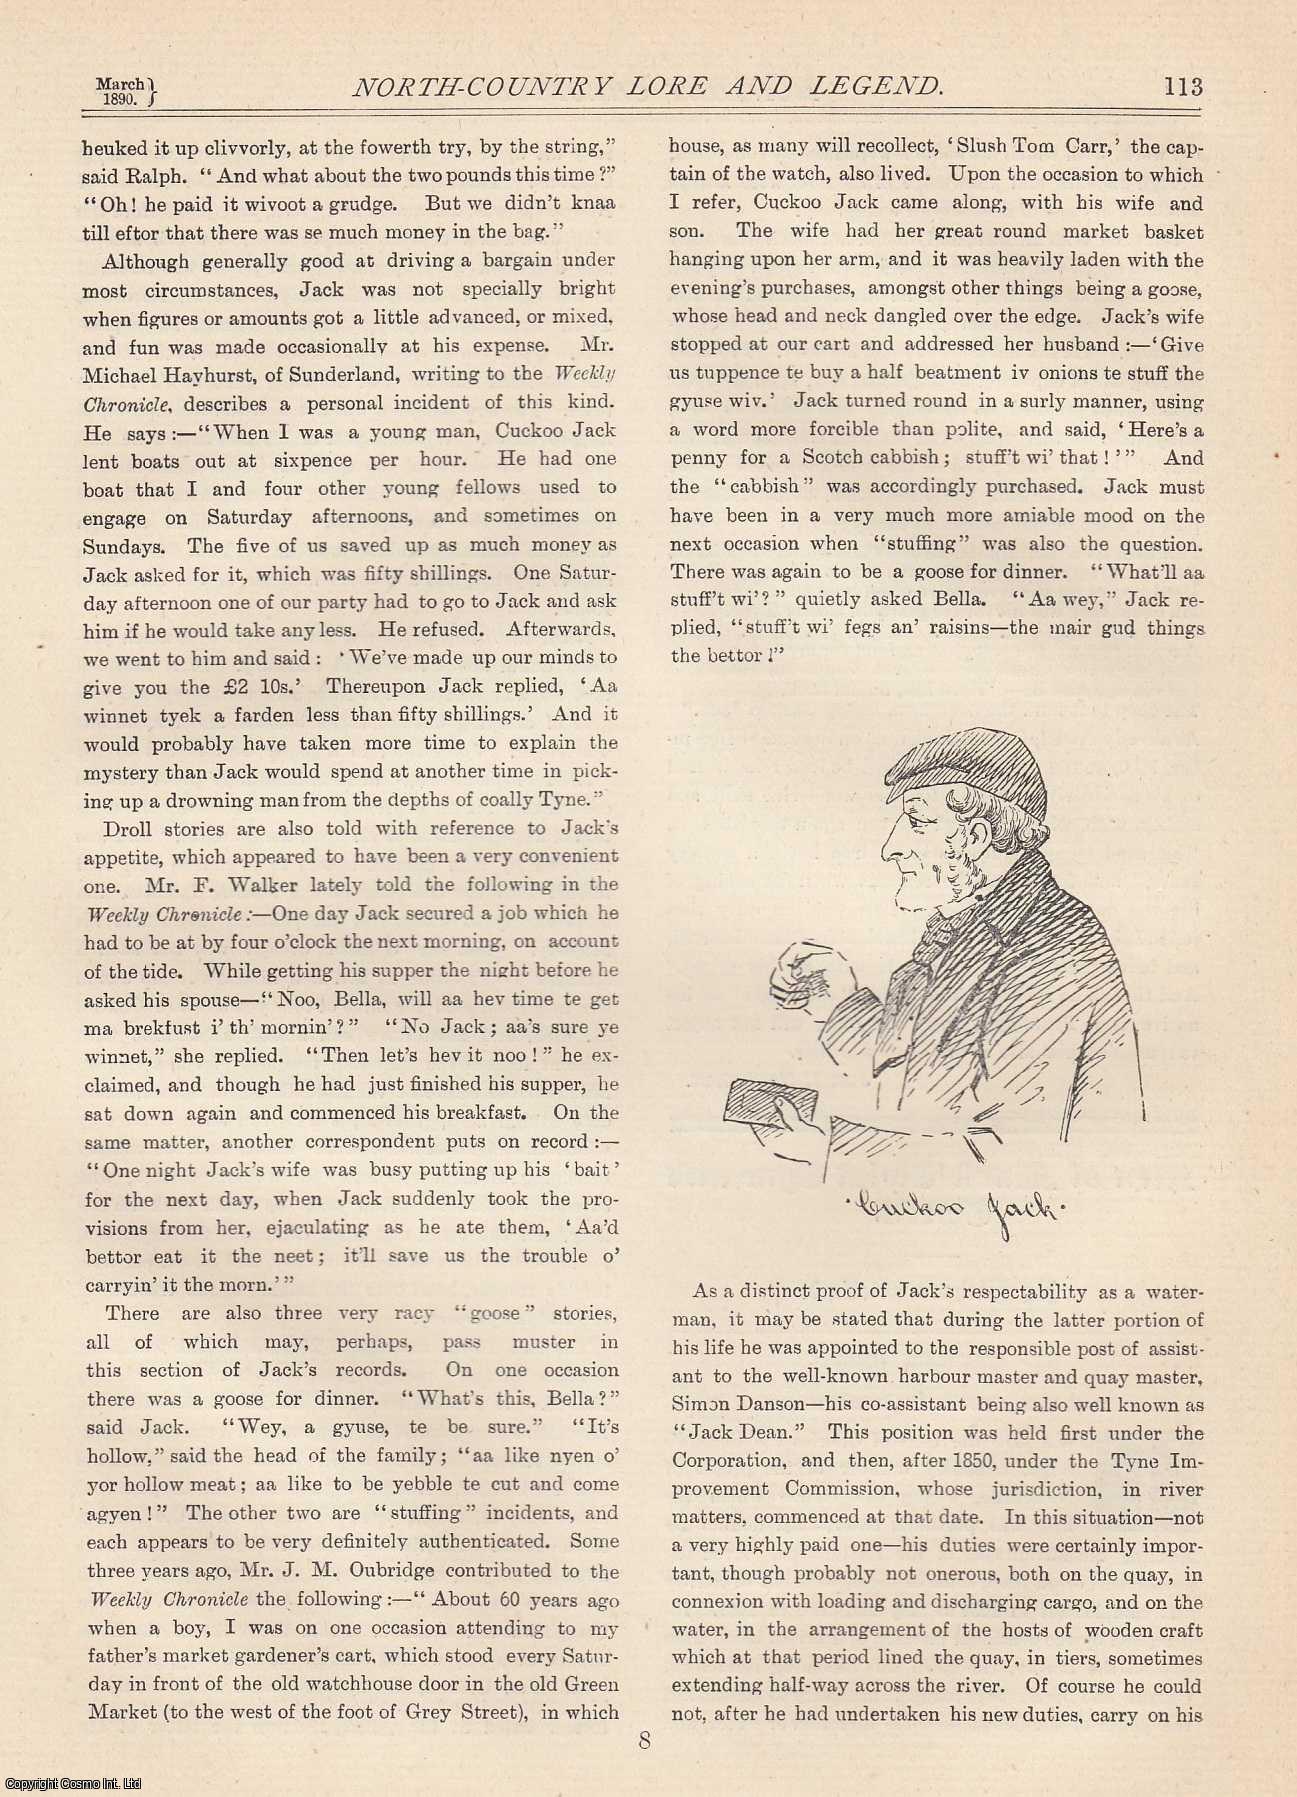 Jos. I. Nicholson - Cuckoo Jack, John Wilson; Tyne waterman. An original article from The Monthly Chronicle 1890.